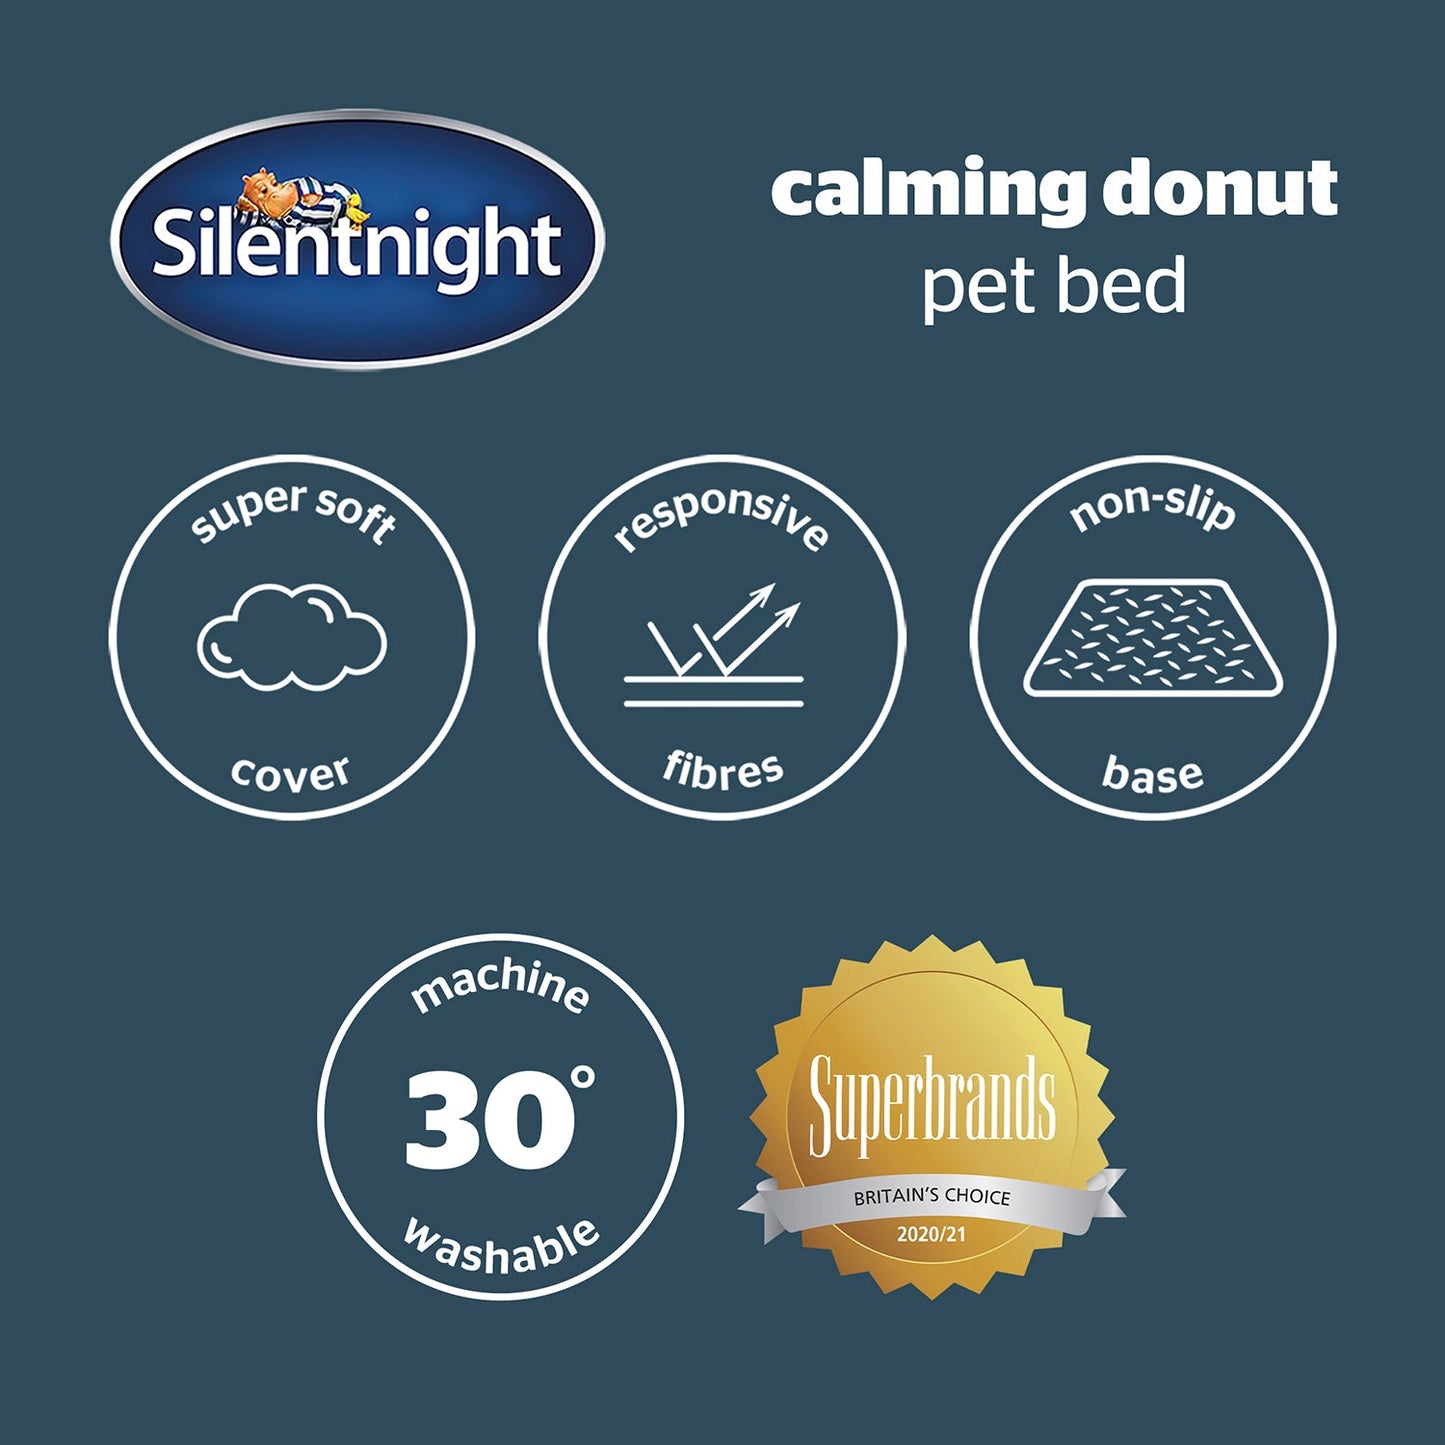 Silentnight Calming Donut Pet Bed